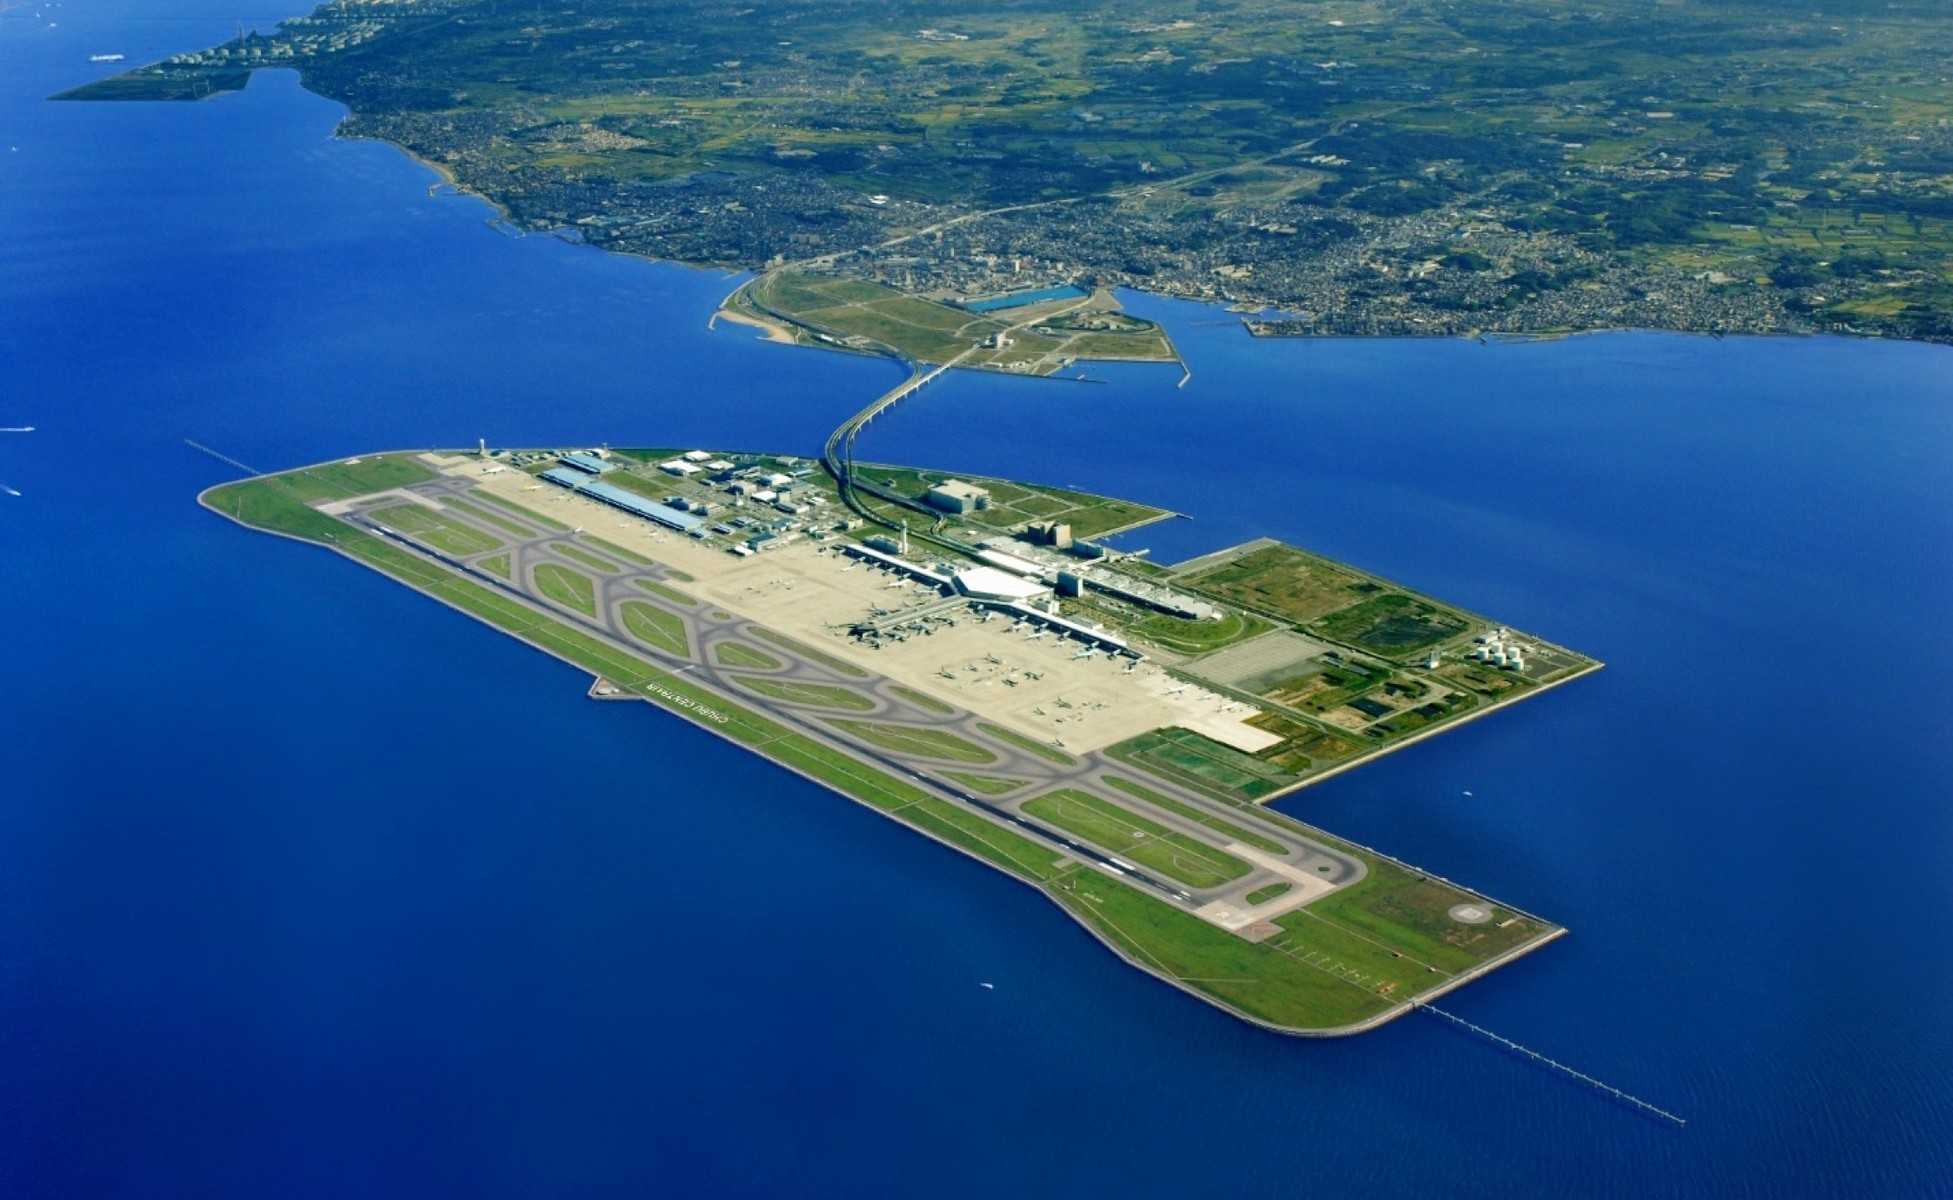 Chubu Centrair Airport named Best Regional Airport at Skytrax Awards